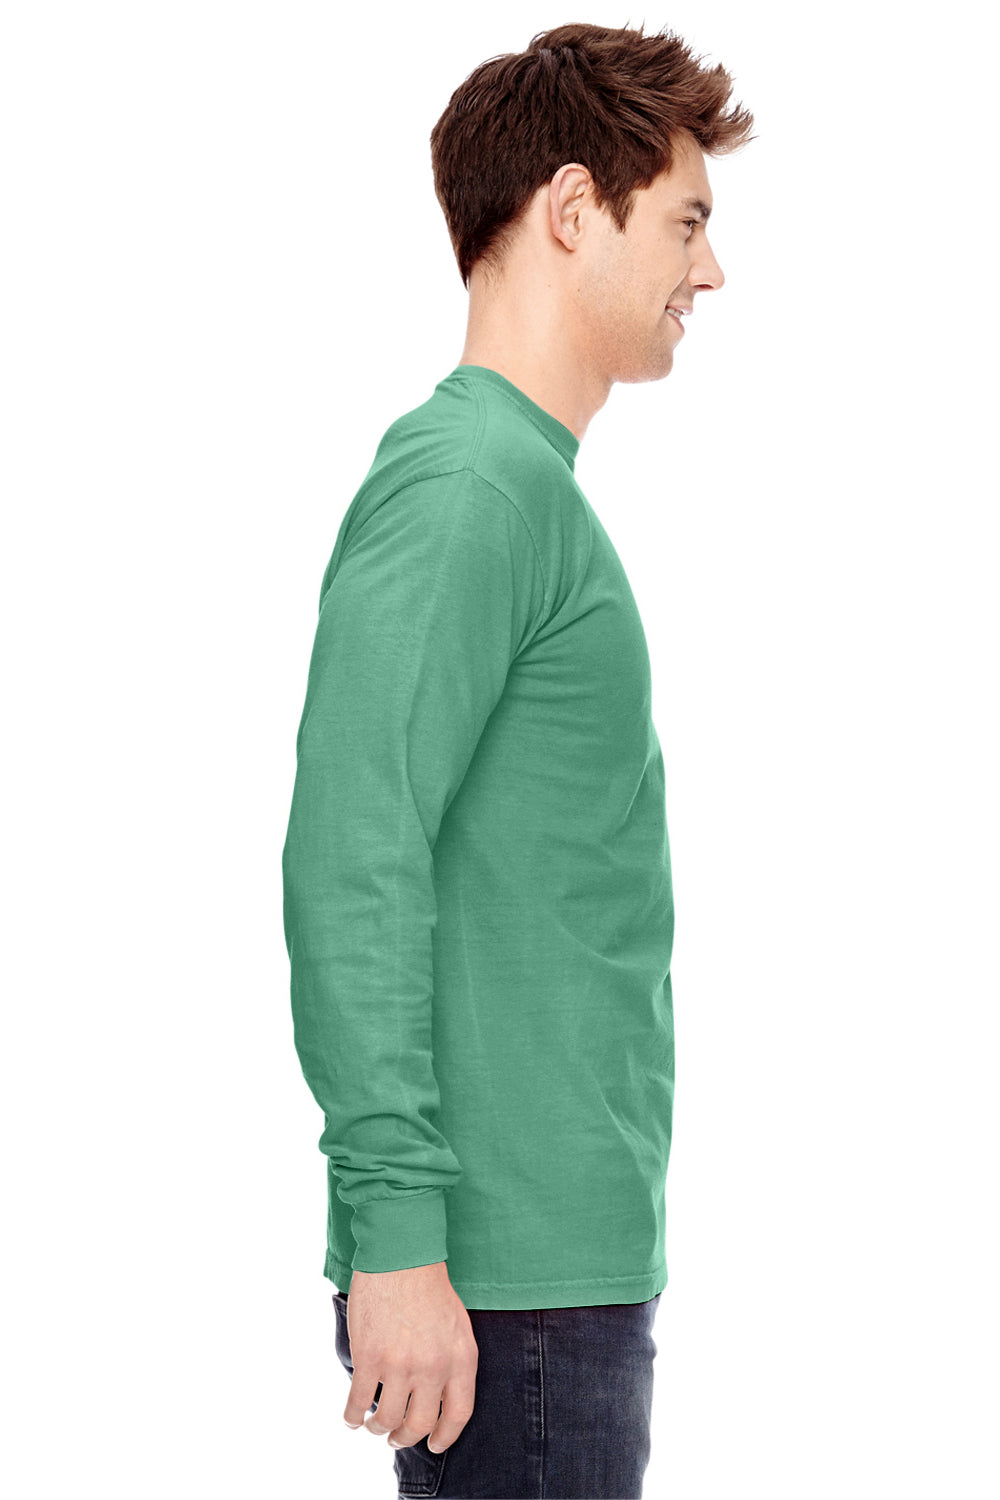 Comfort Colors C6014 Mens Long Sleeve Crewneck T-Shirt Island Reef Green Side